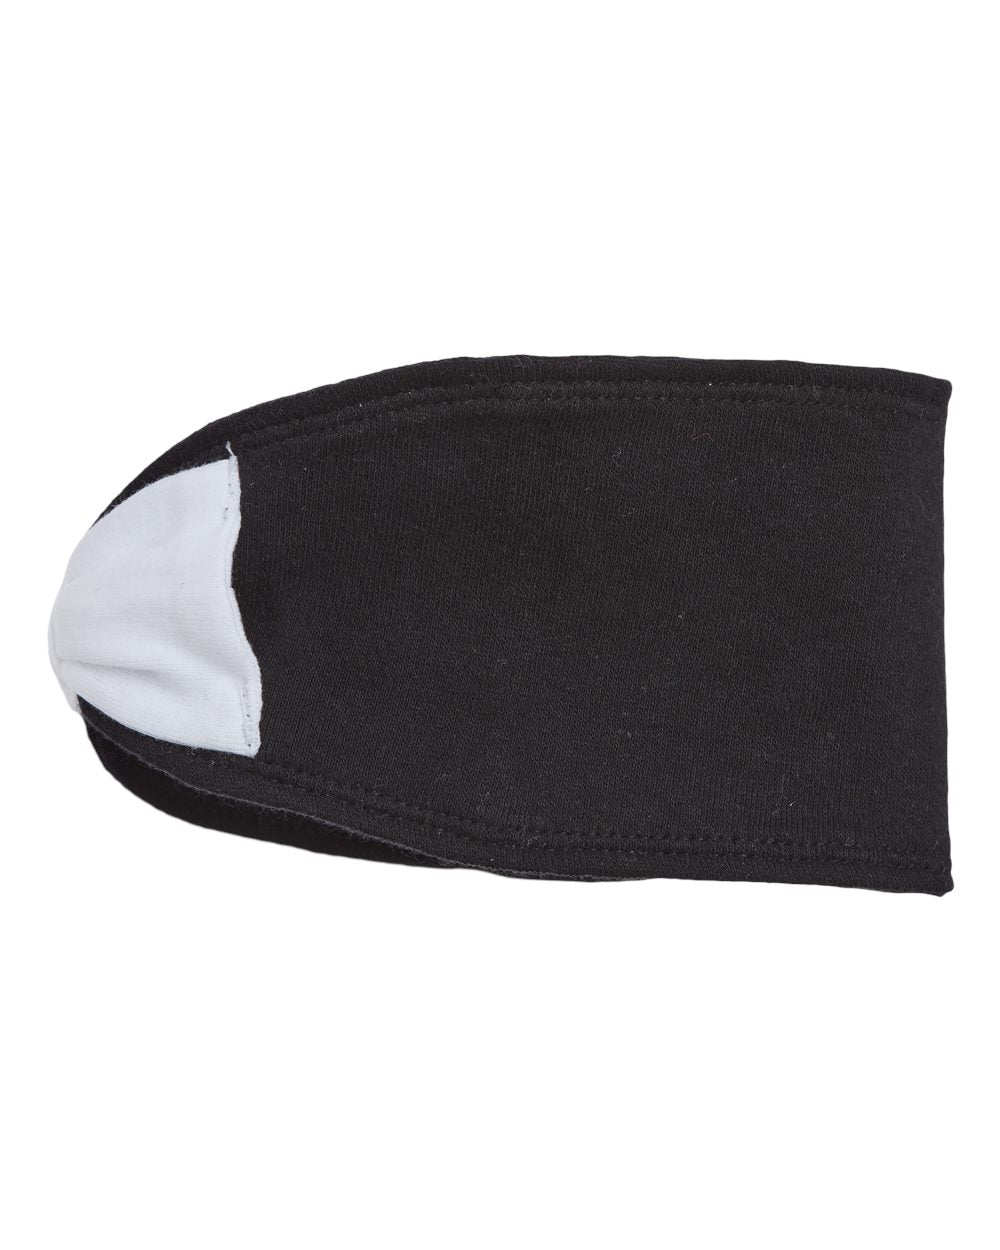 Baby Headband with Bow Tie, (Black-White)